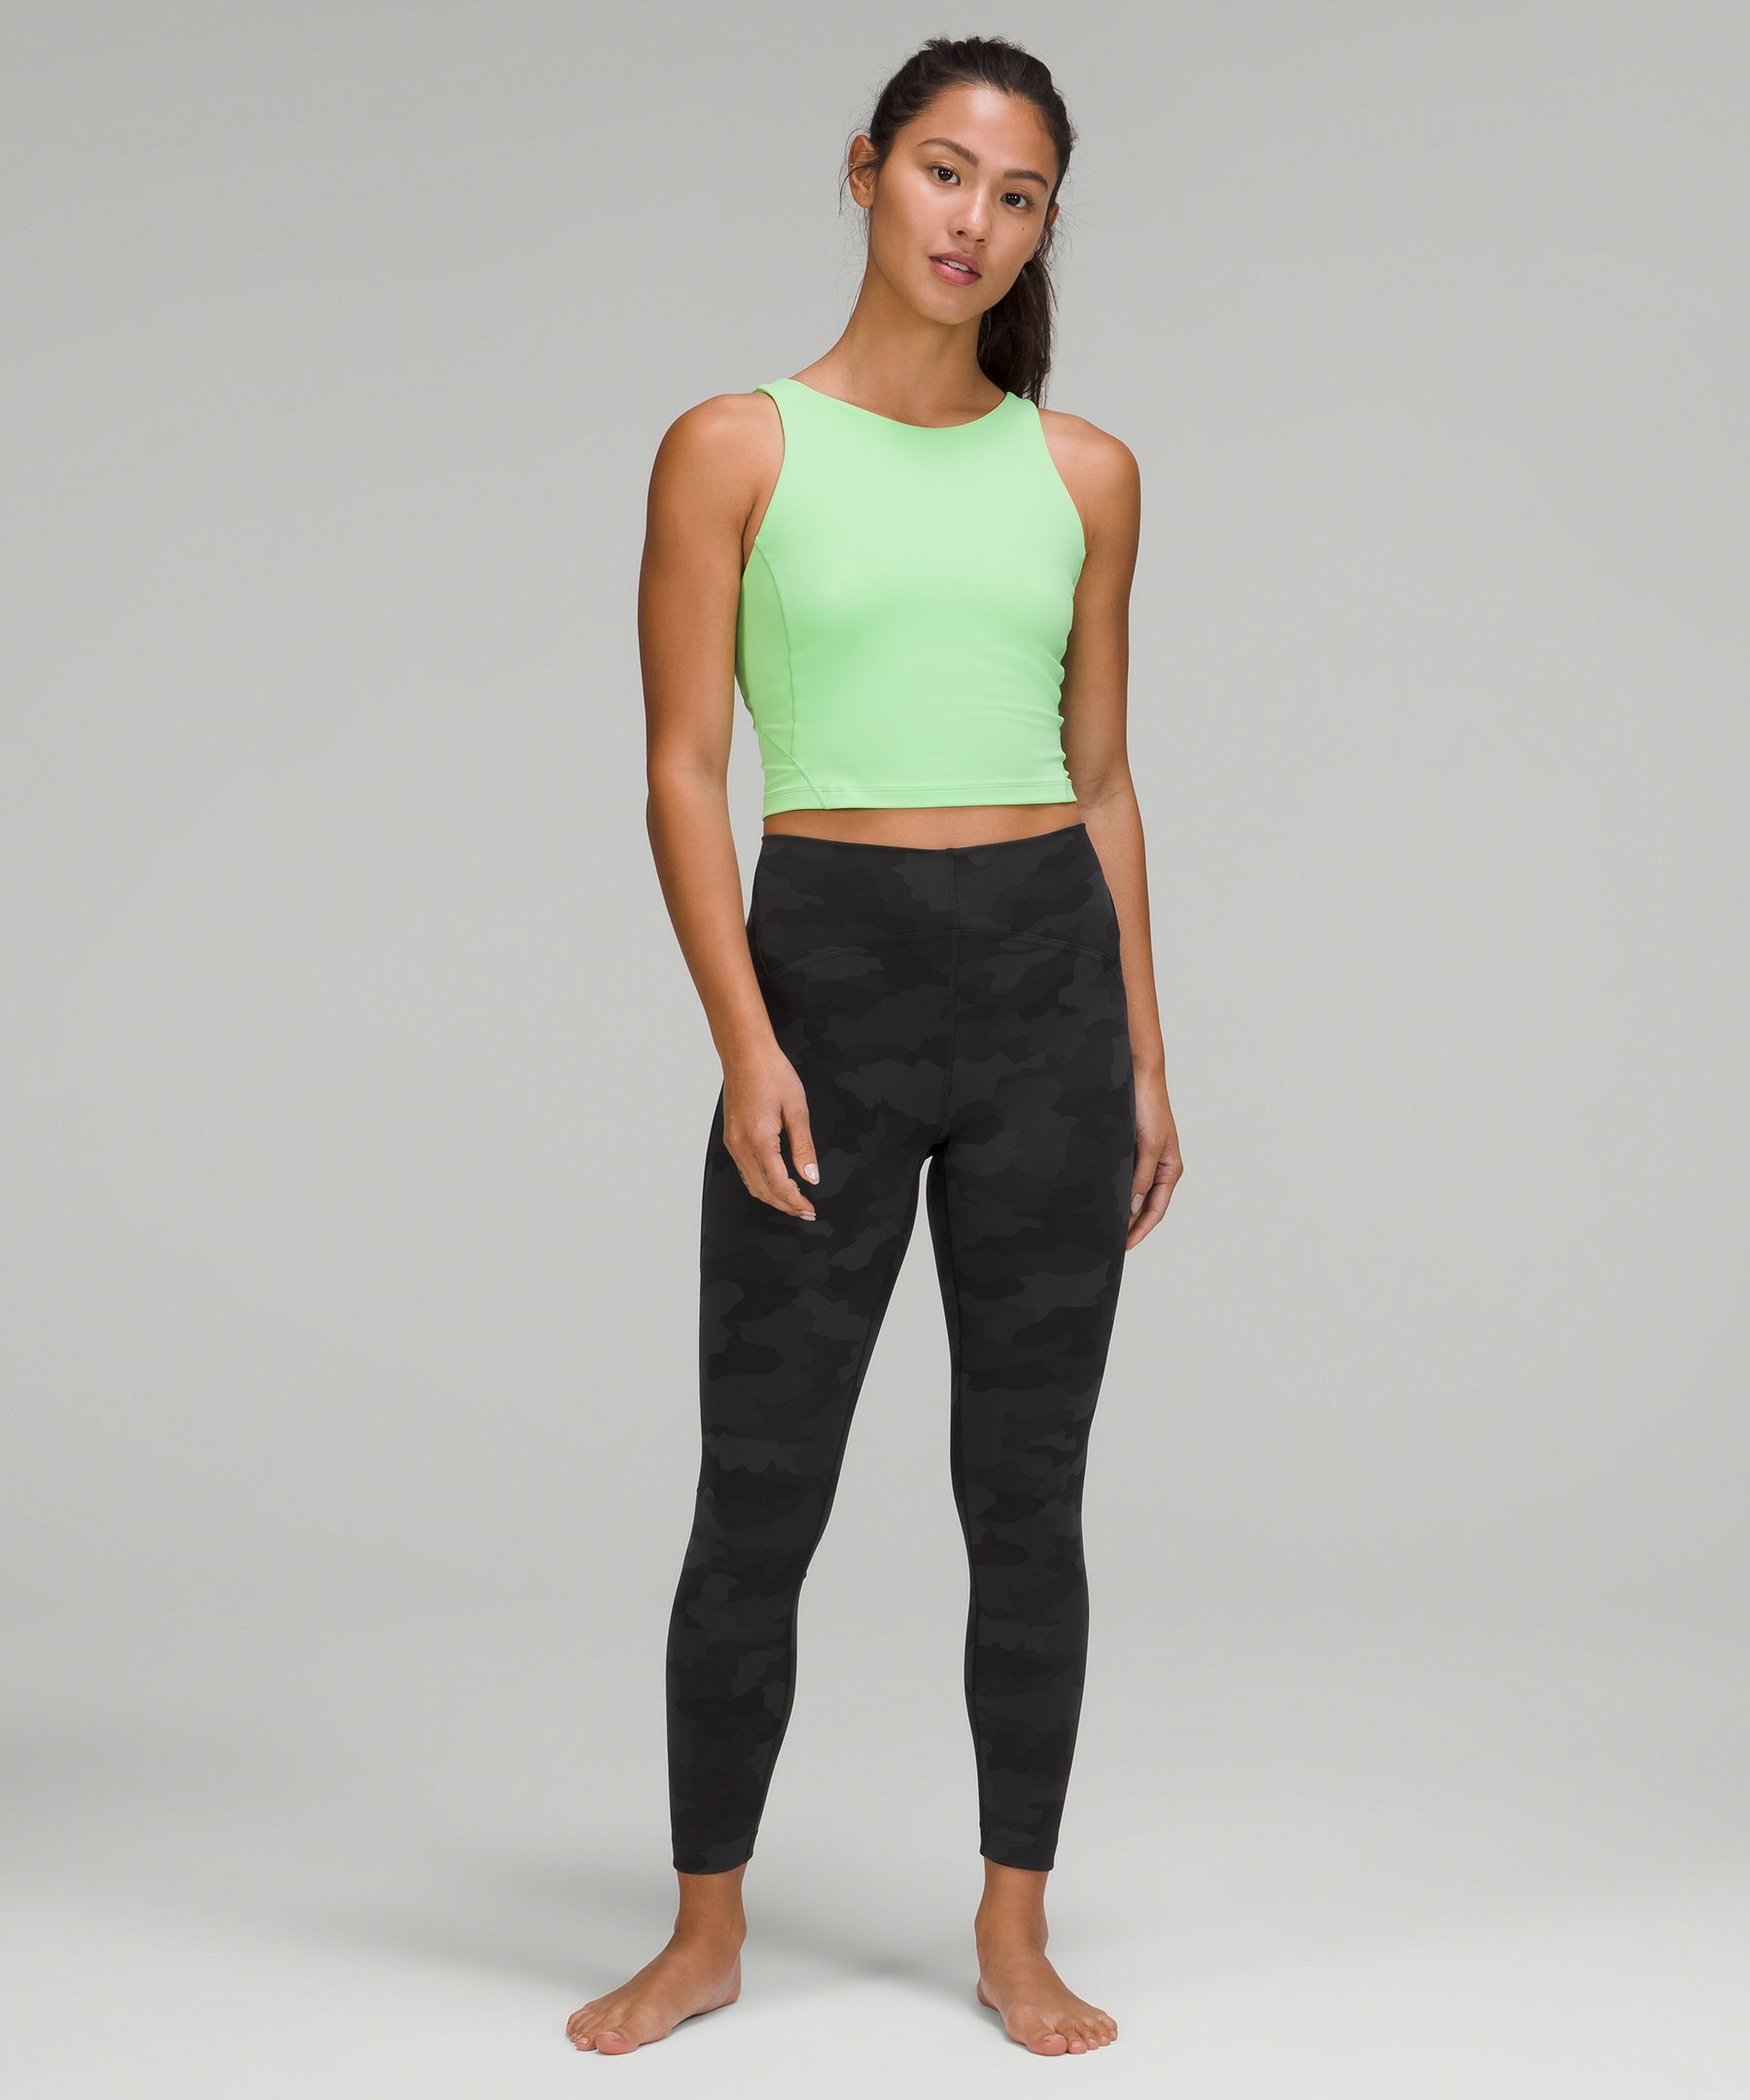 Lululemon InStill High-Rise Tights 25 - ShopStyle Activewear Pants